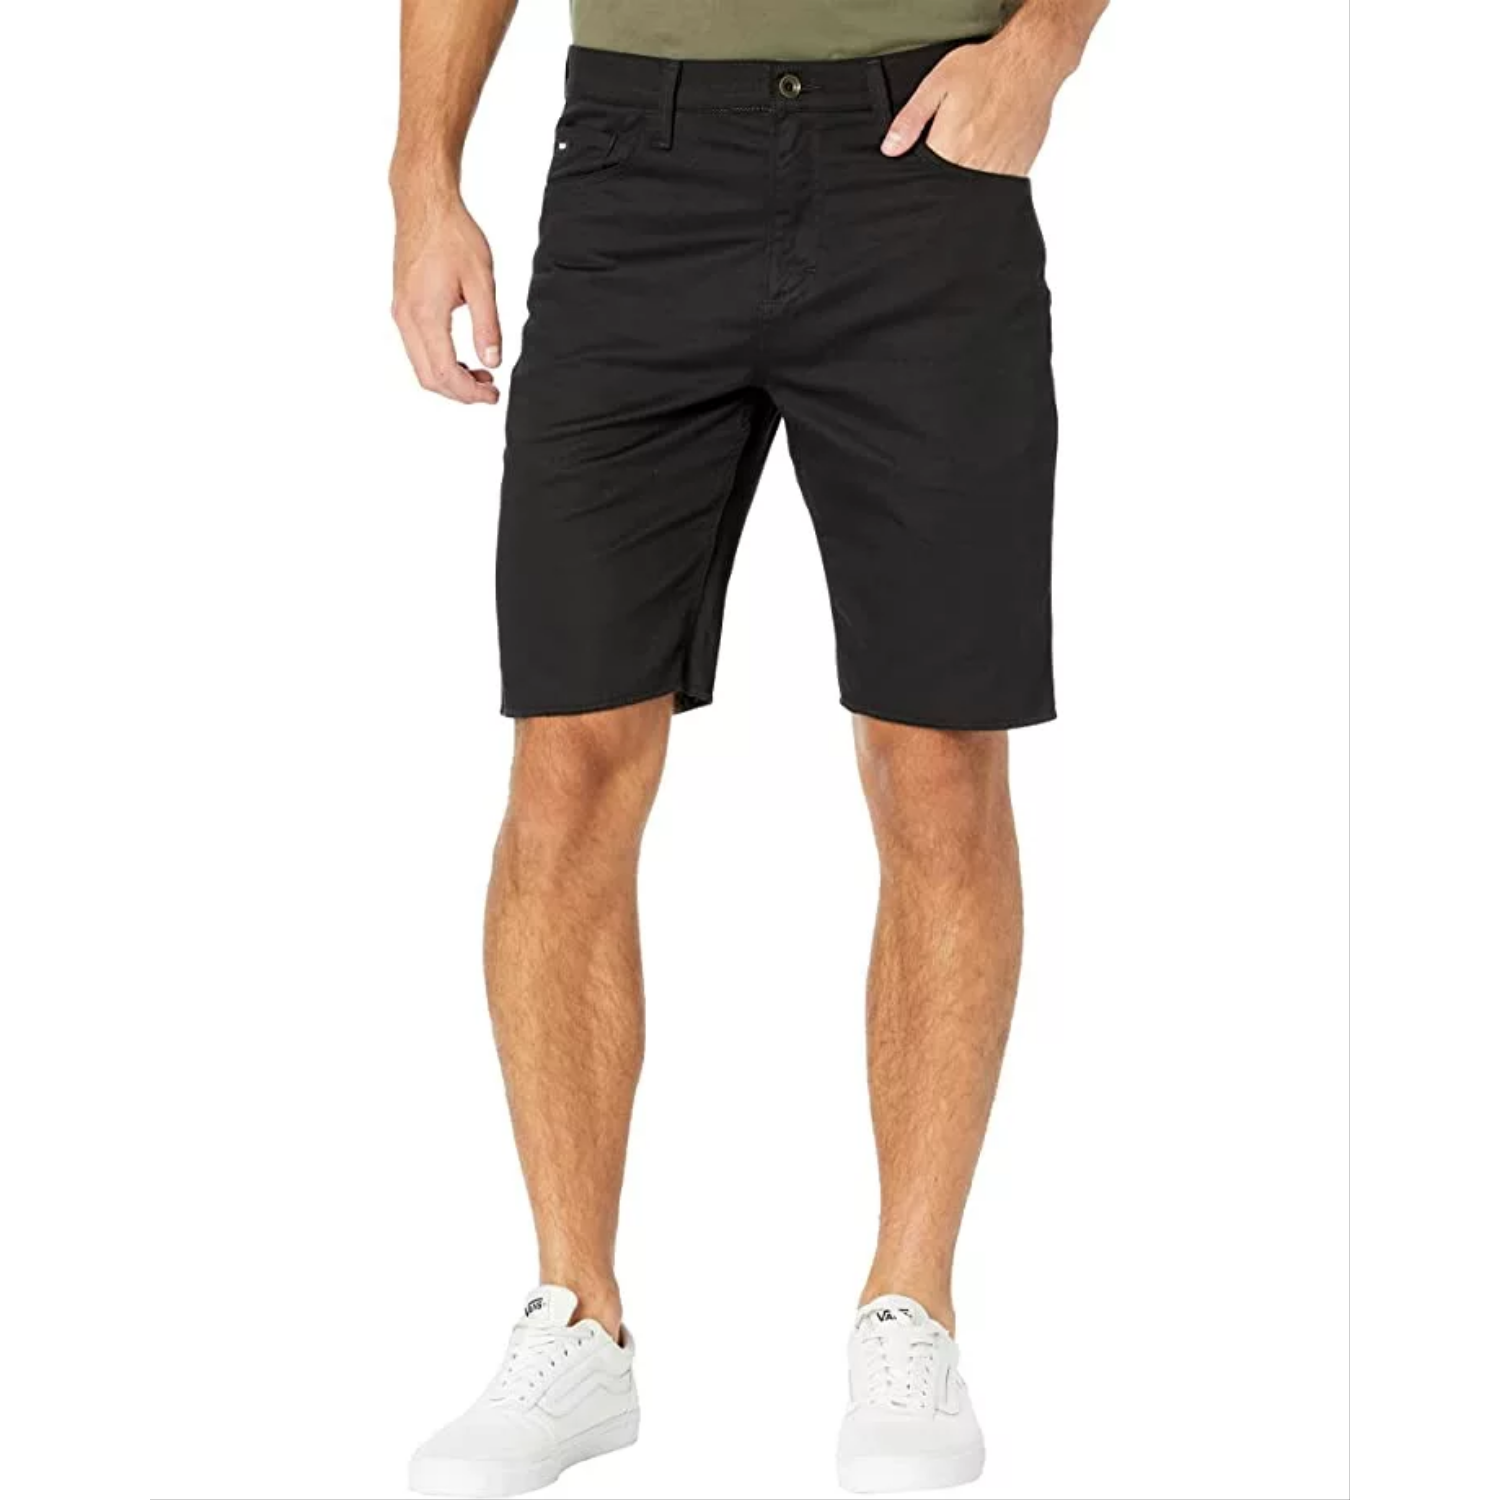 Shop Men\'s Shorts - Stylish Great & Deals! Comfortable 